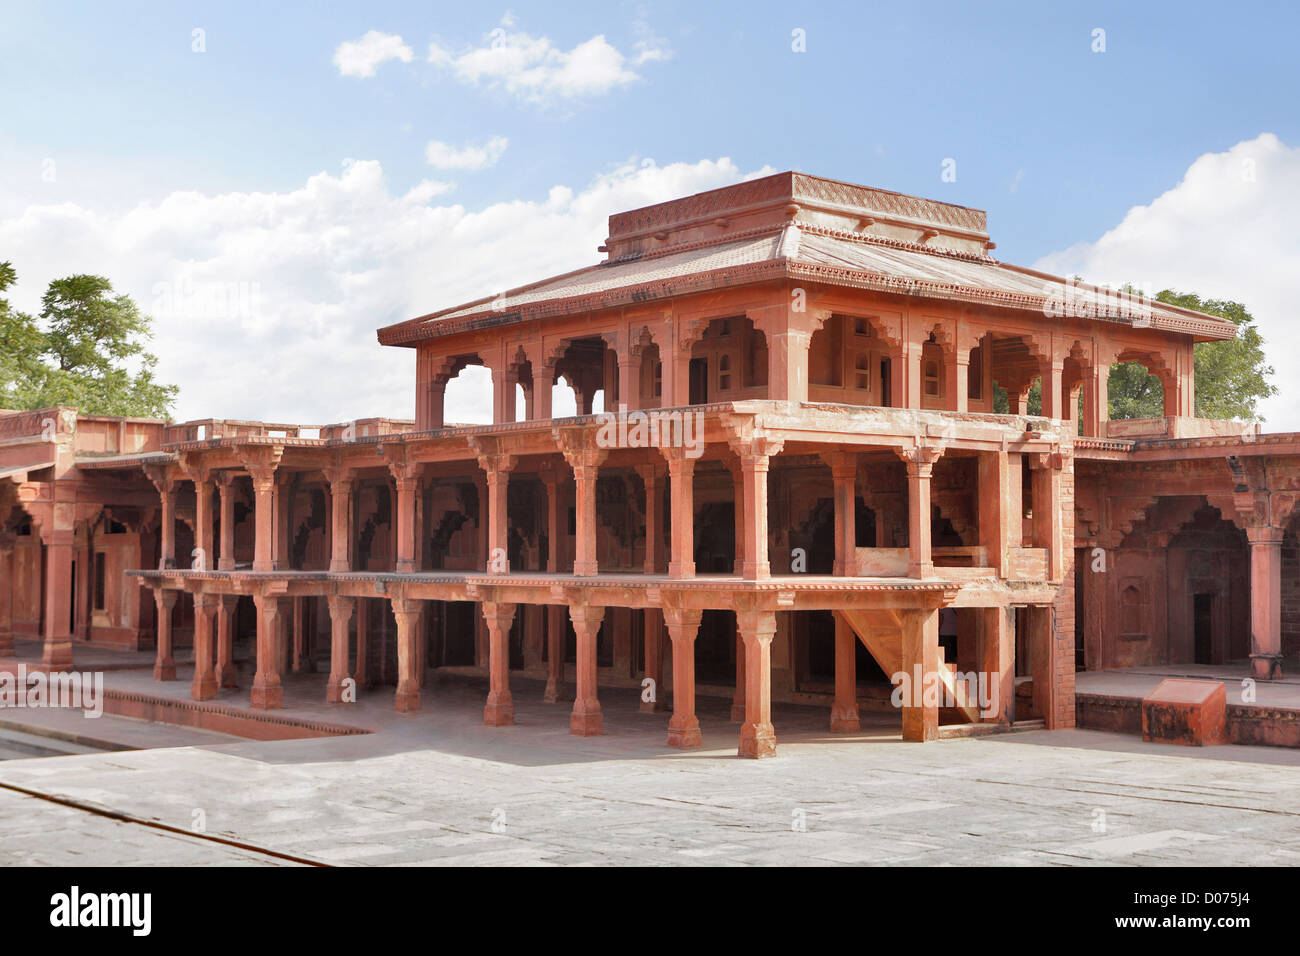 The deserted city of Fatehpur Sikri, Uttar Pradesh, India | Flickr